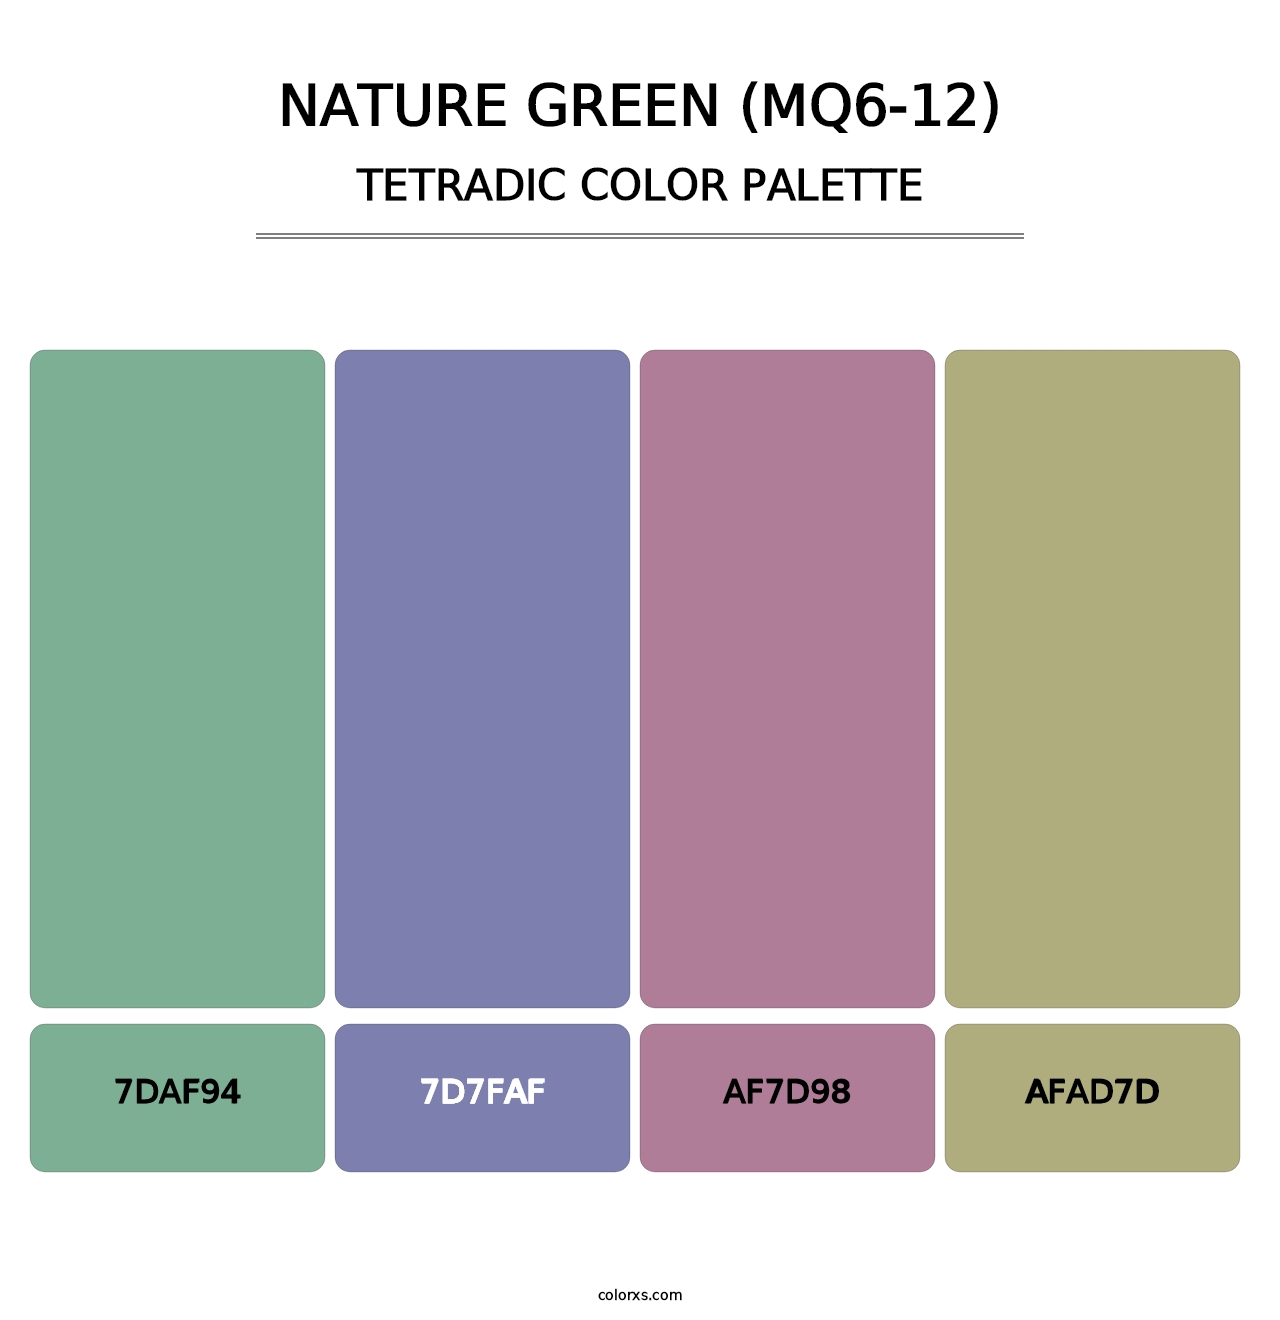 Nature Green (MQ6-12) - Tetradic Color Palette